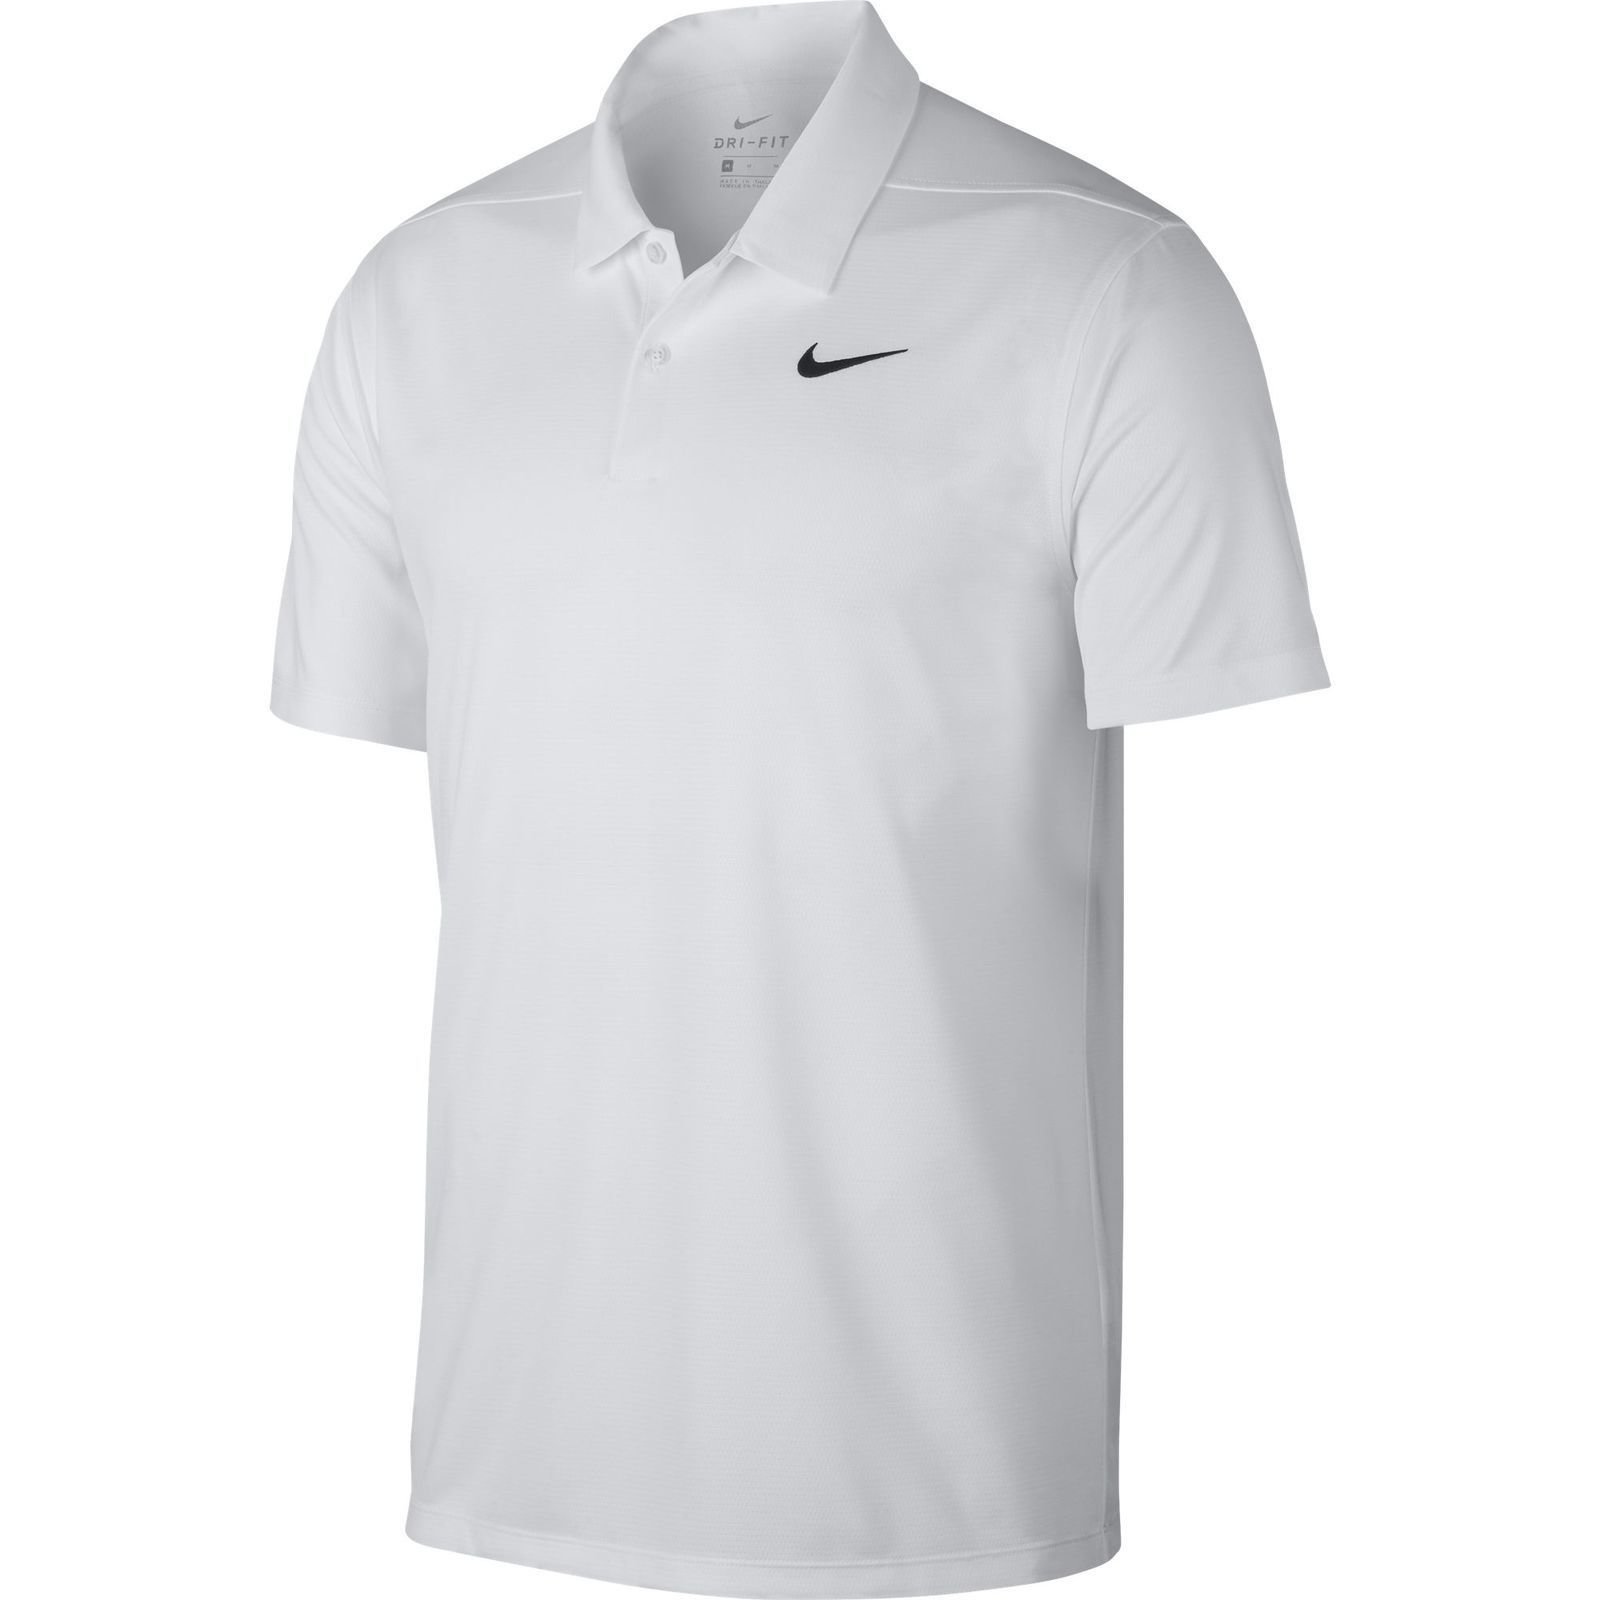 Polo majica Nike Dry Essential Solid Bijela-Crna XL